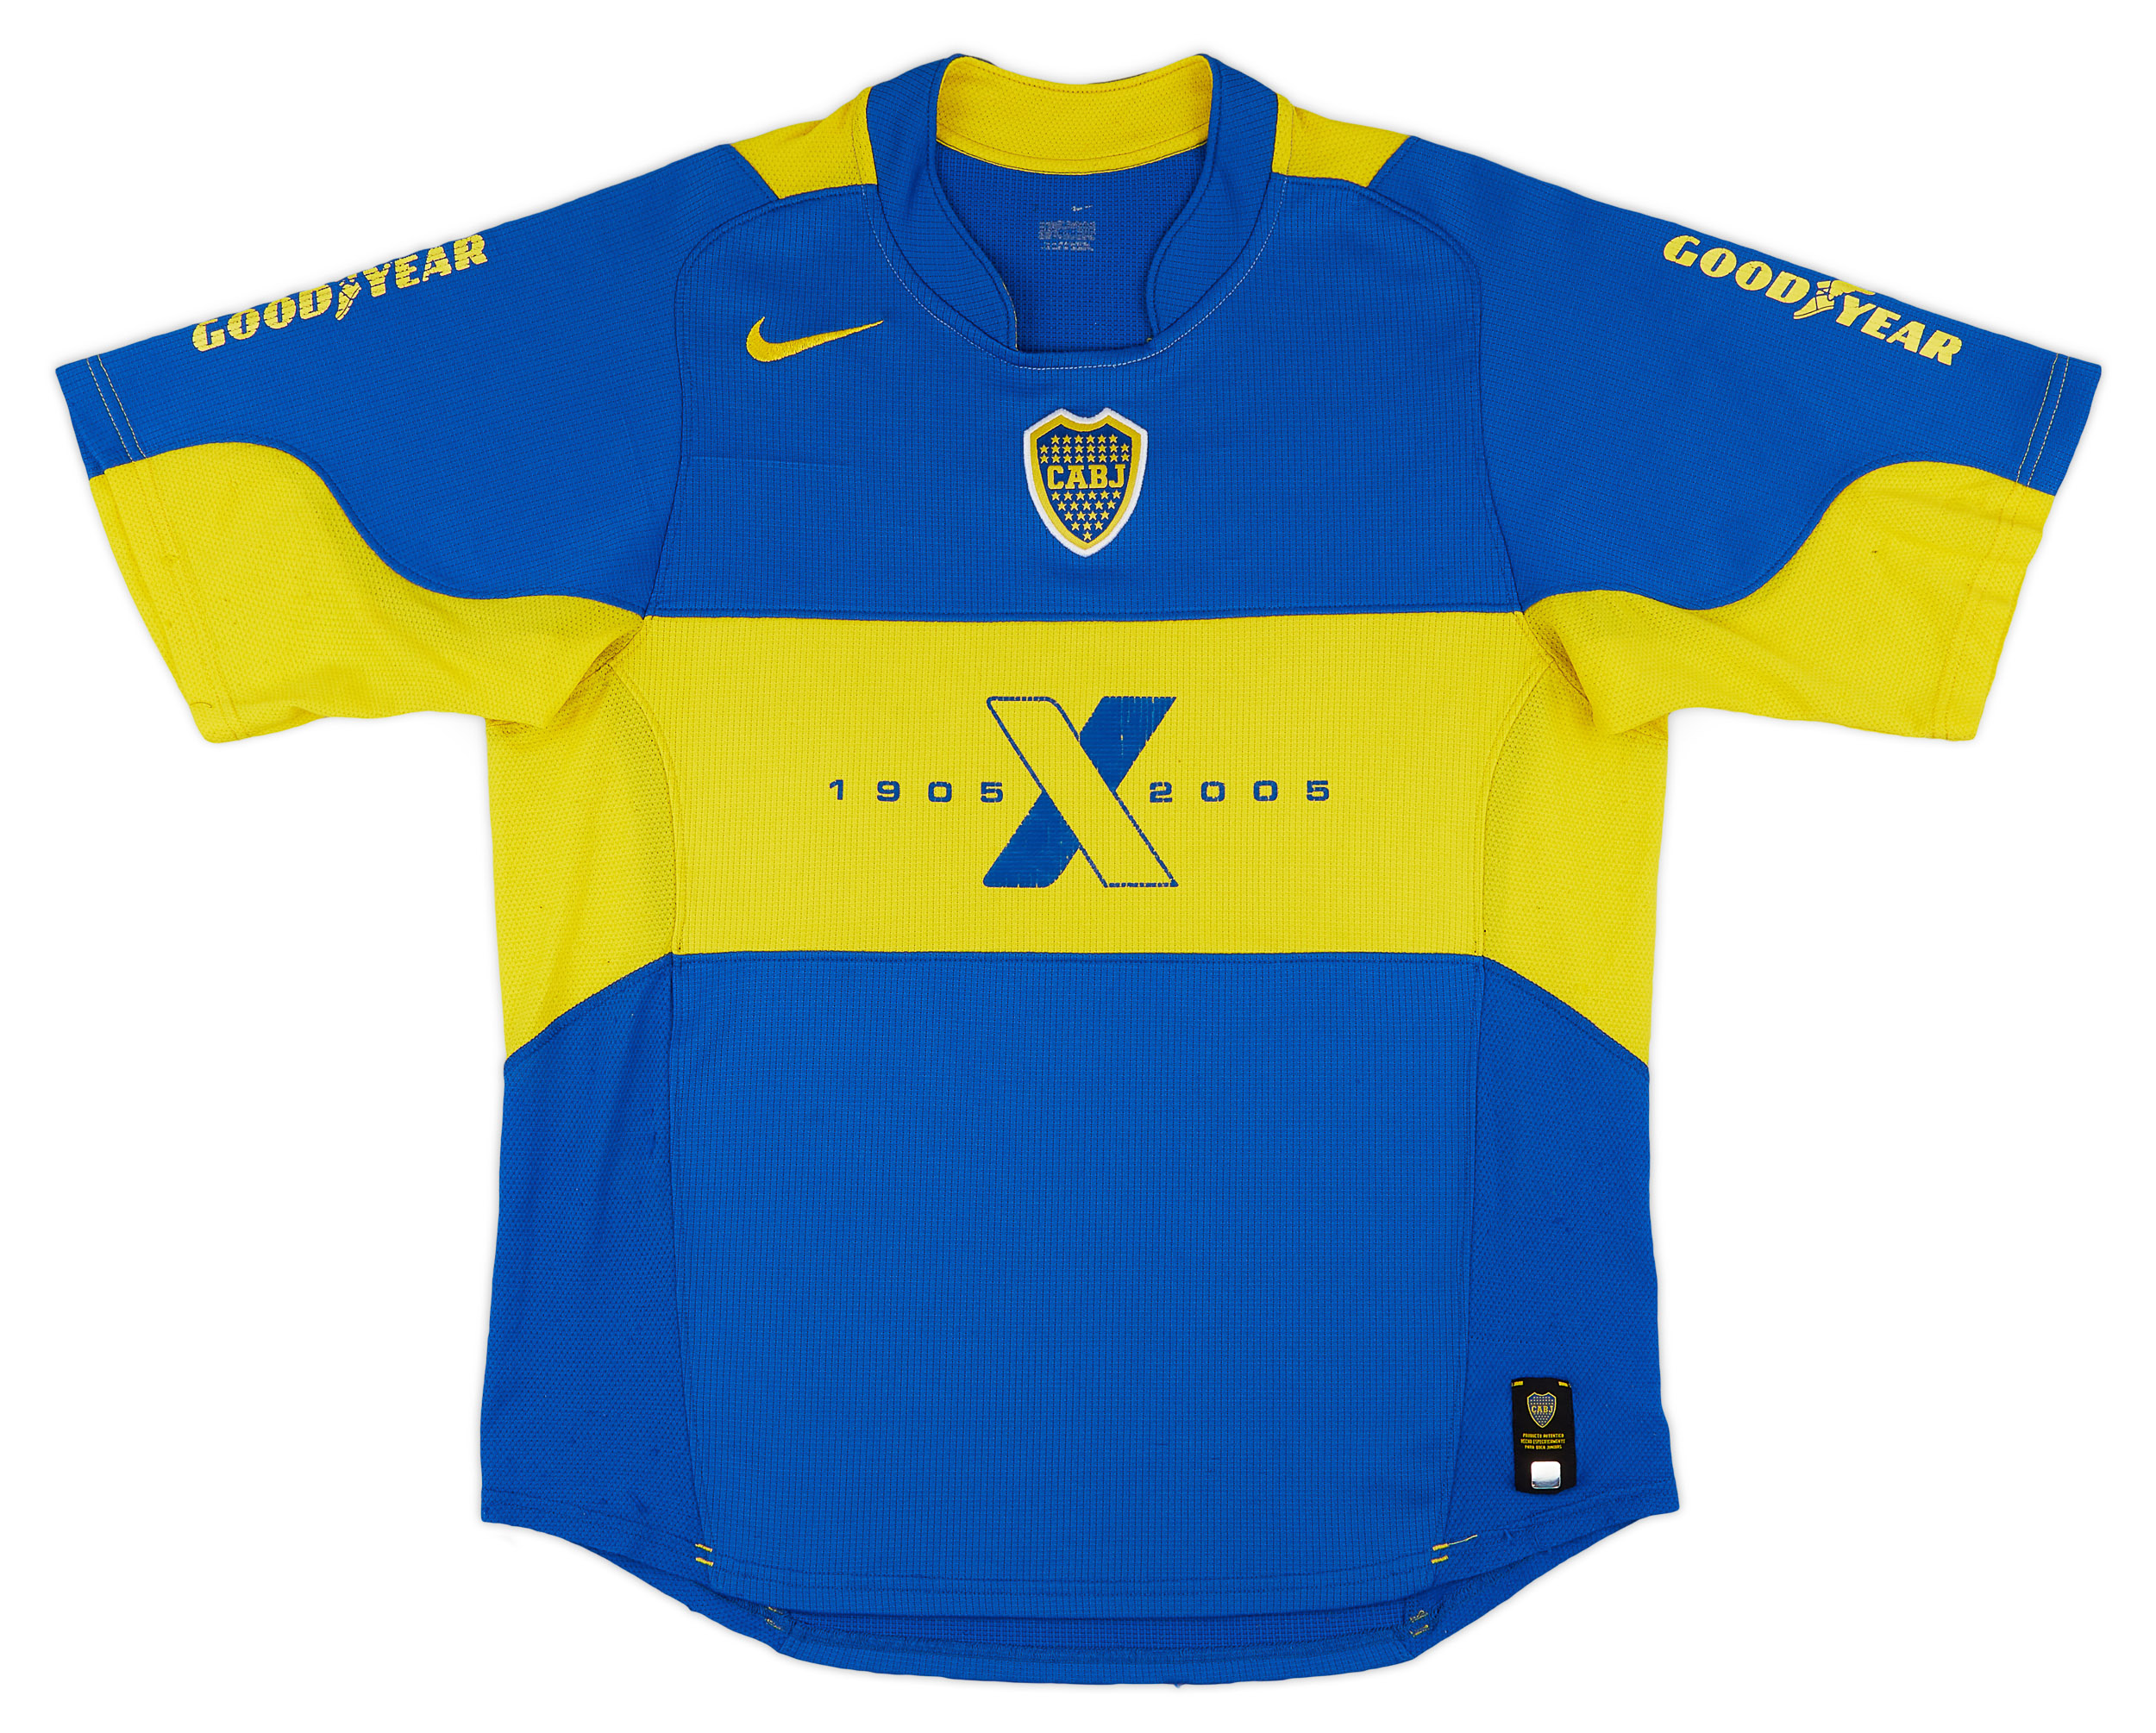 Classic Football Shirts on X: No More Nike The new Boca Juniors